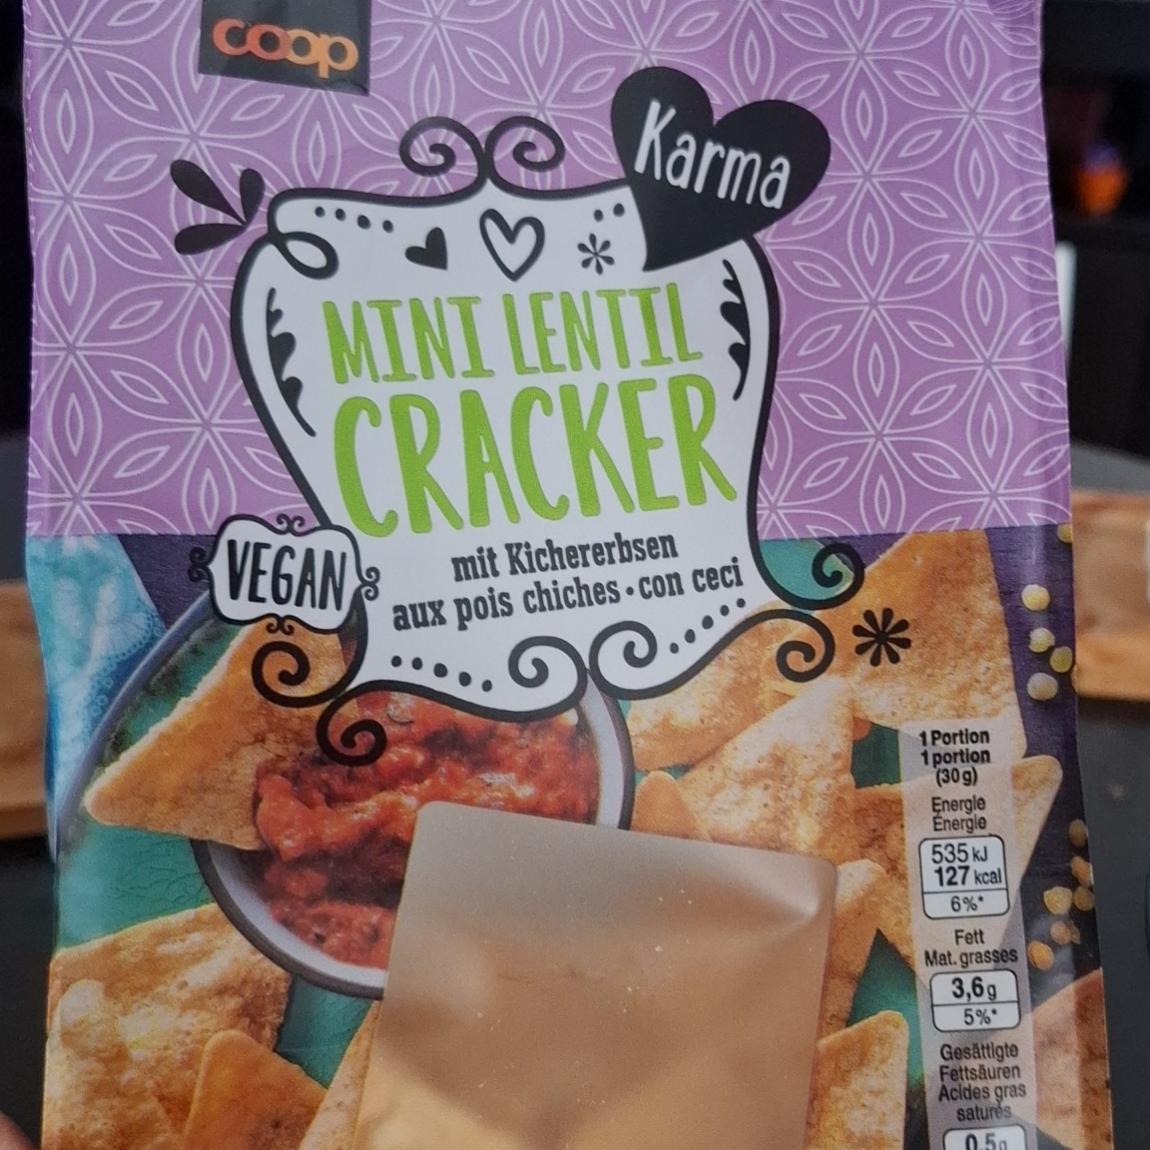 Fotografie - Mini lentil cracker mit kichererbsen karma Coop